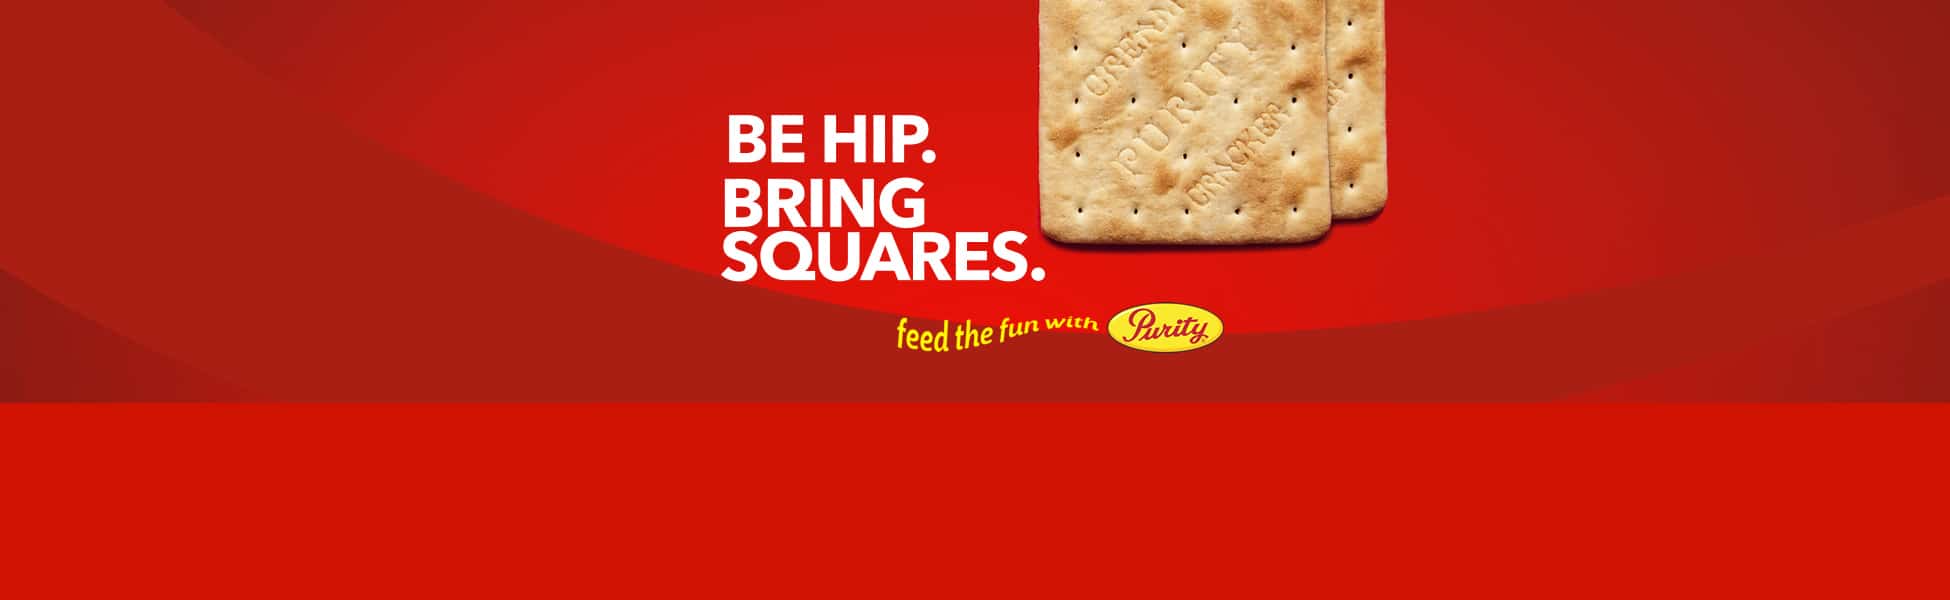 Be Hip. Bring Squares.